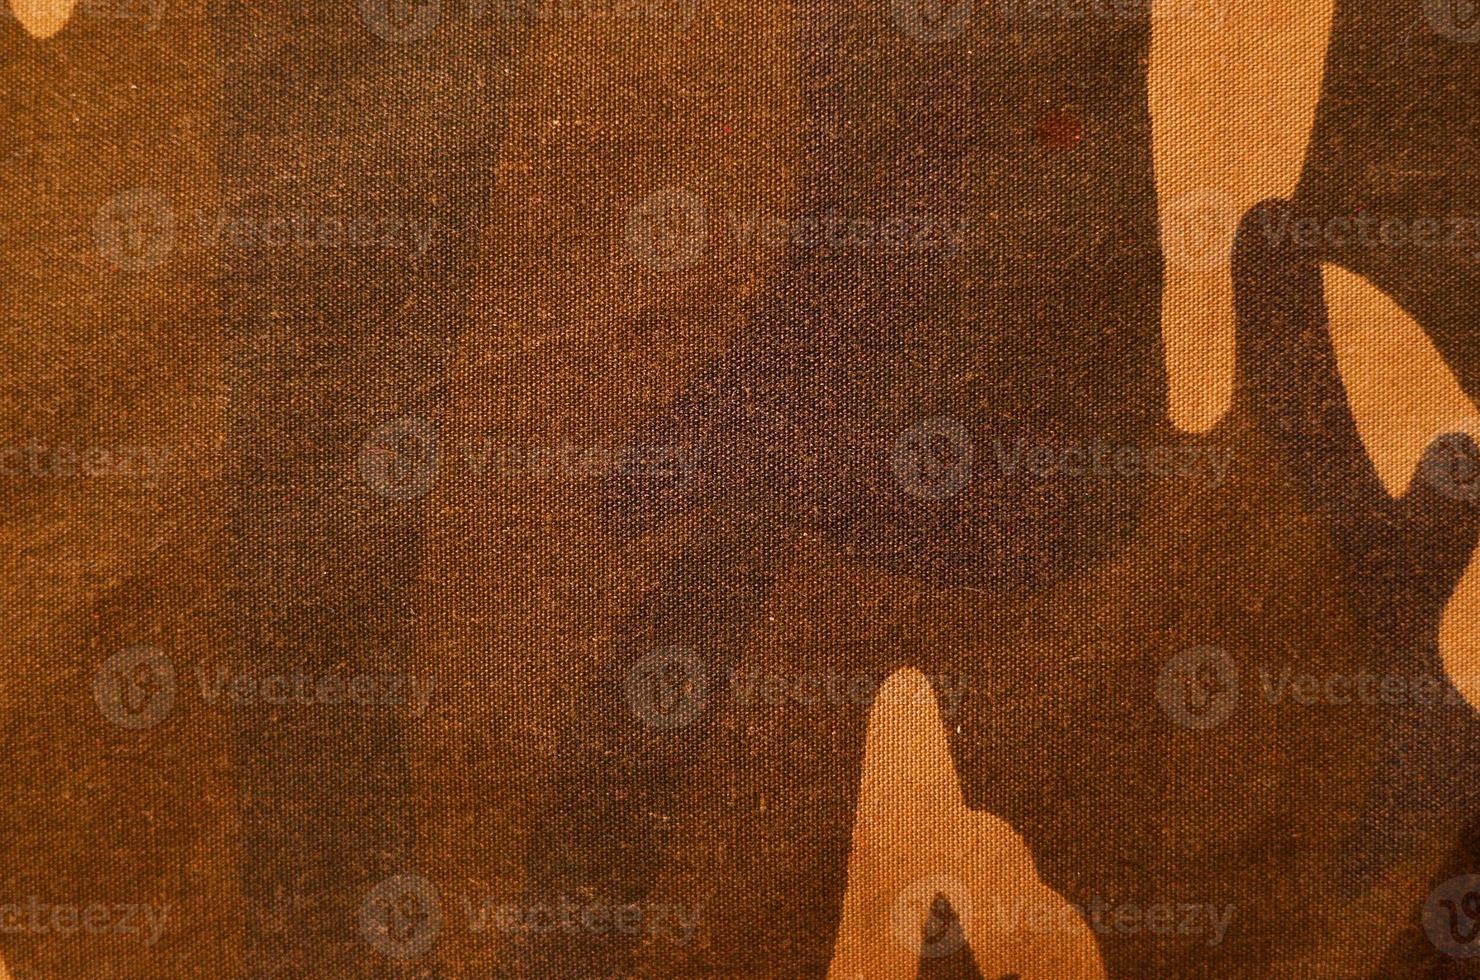 Textile camouflage cloth texture photo